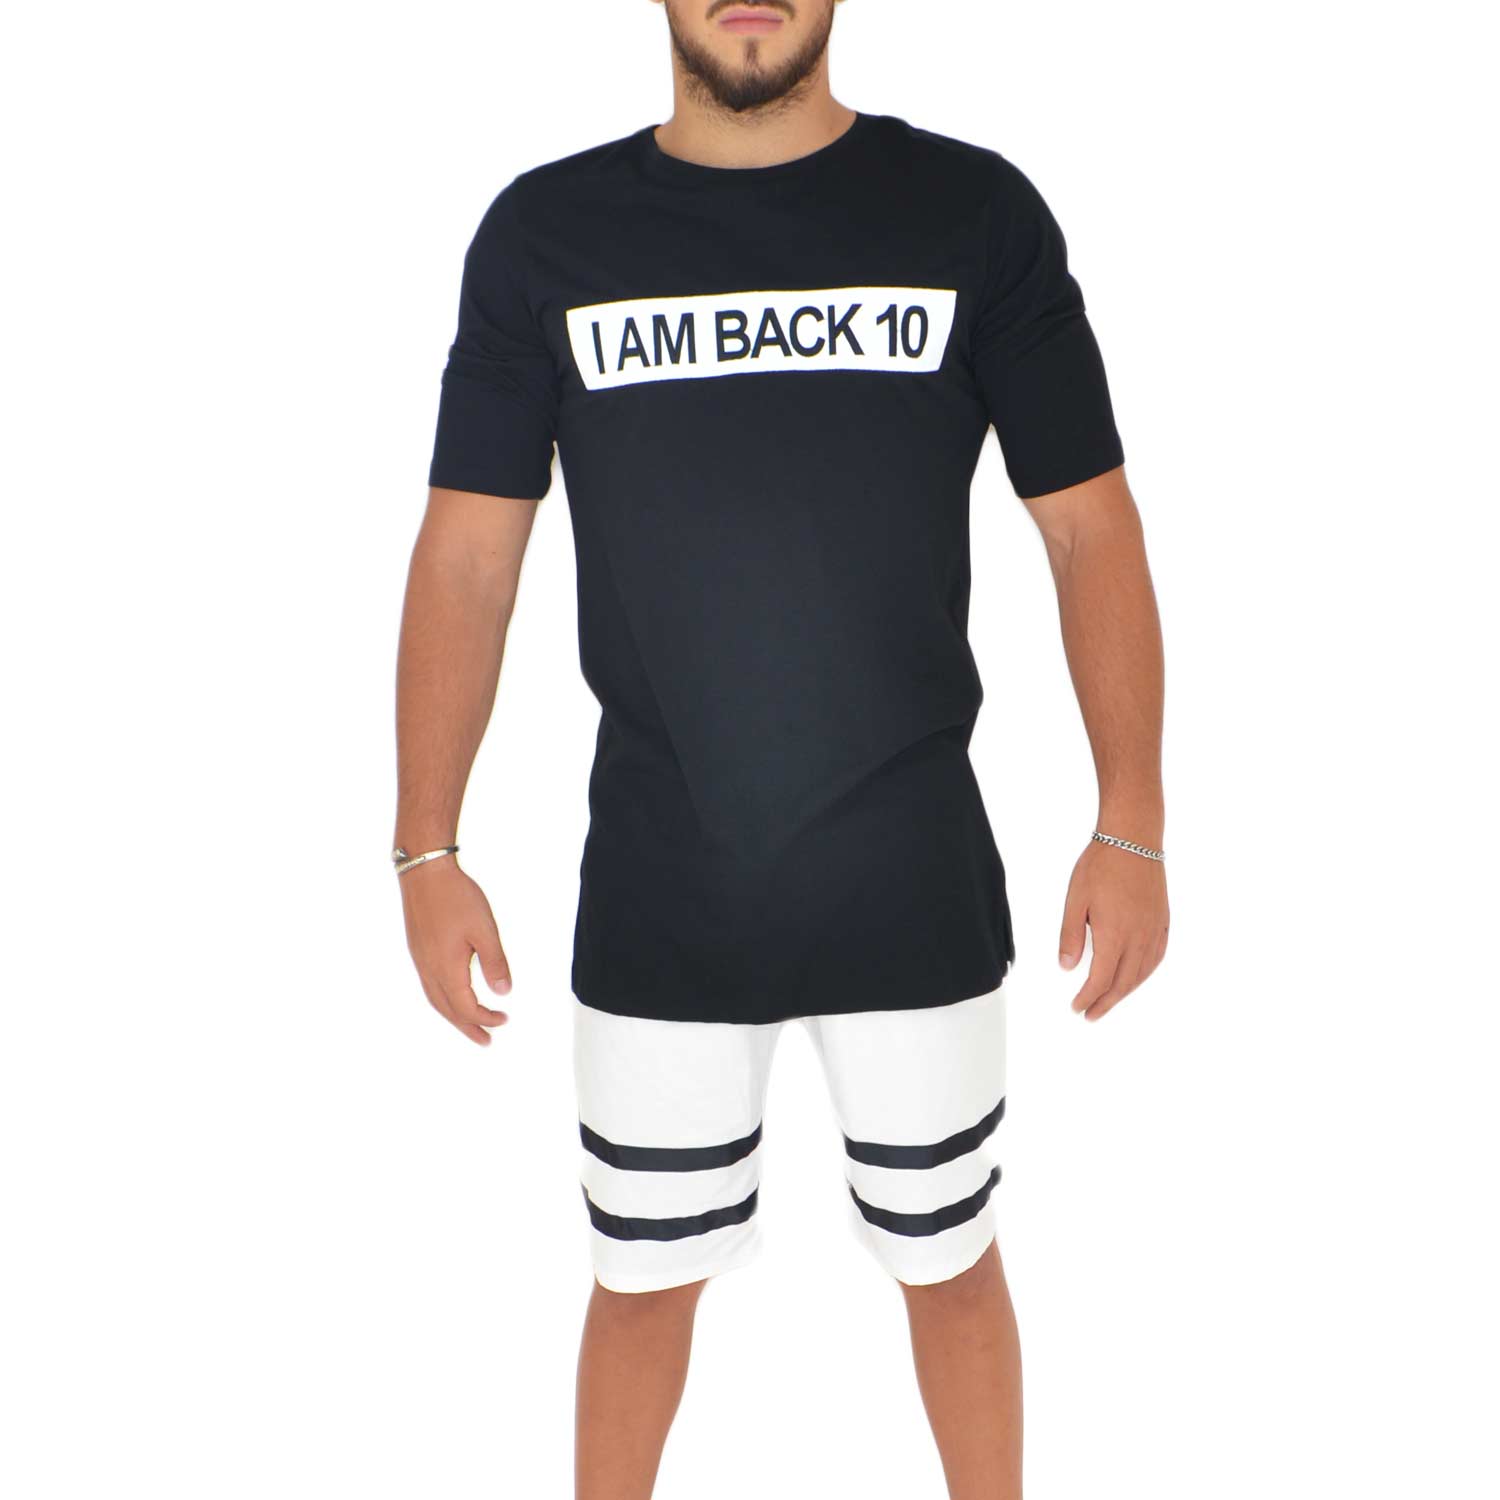 T- shirt basic uomo in cotone nero slim fit girocollo con cucitura a contrasto I'M BACK 10 made in italy.